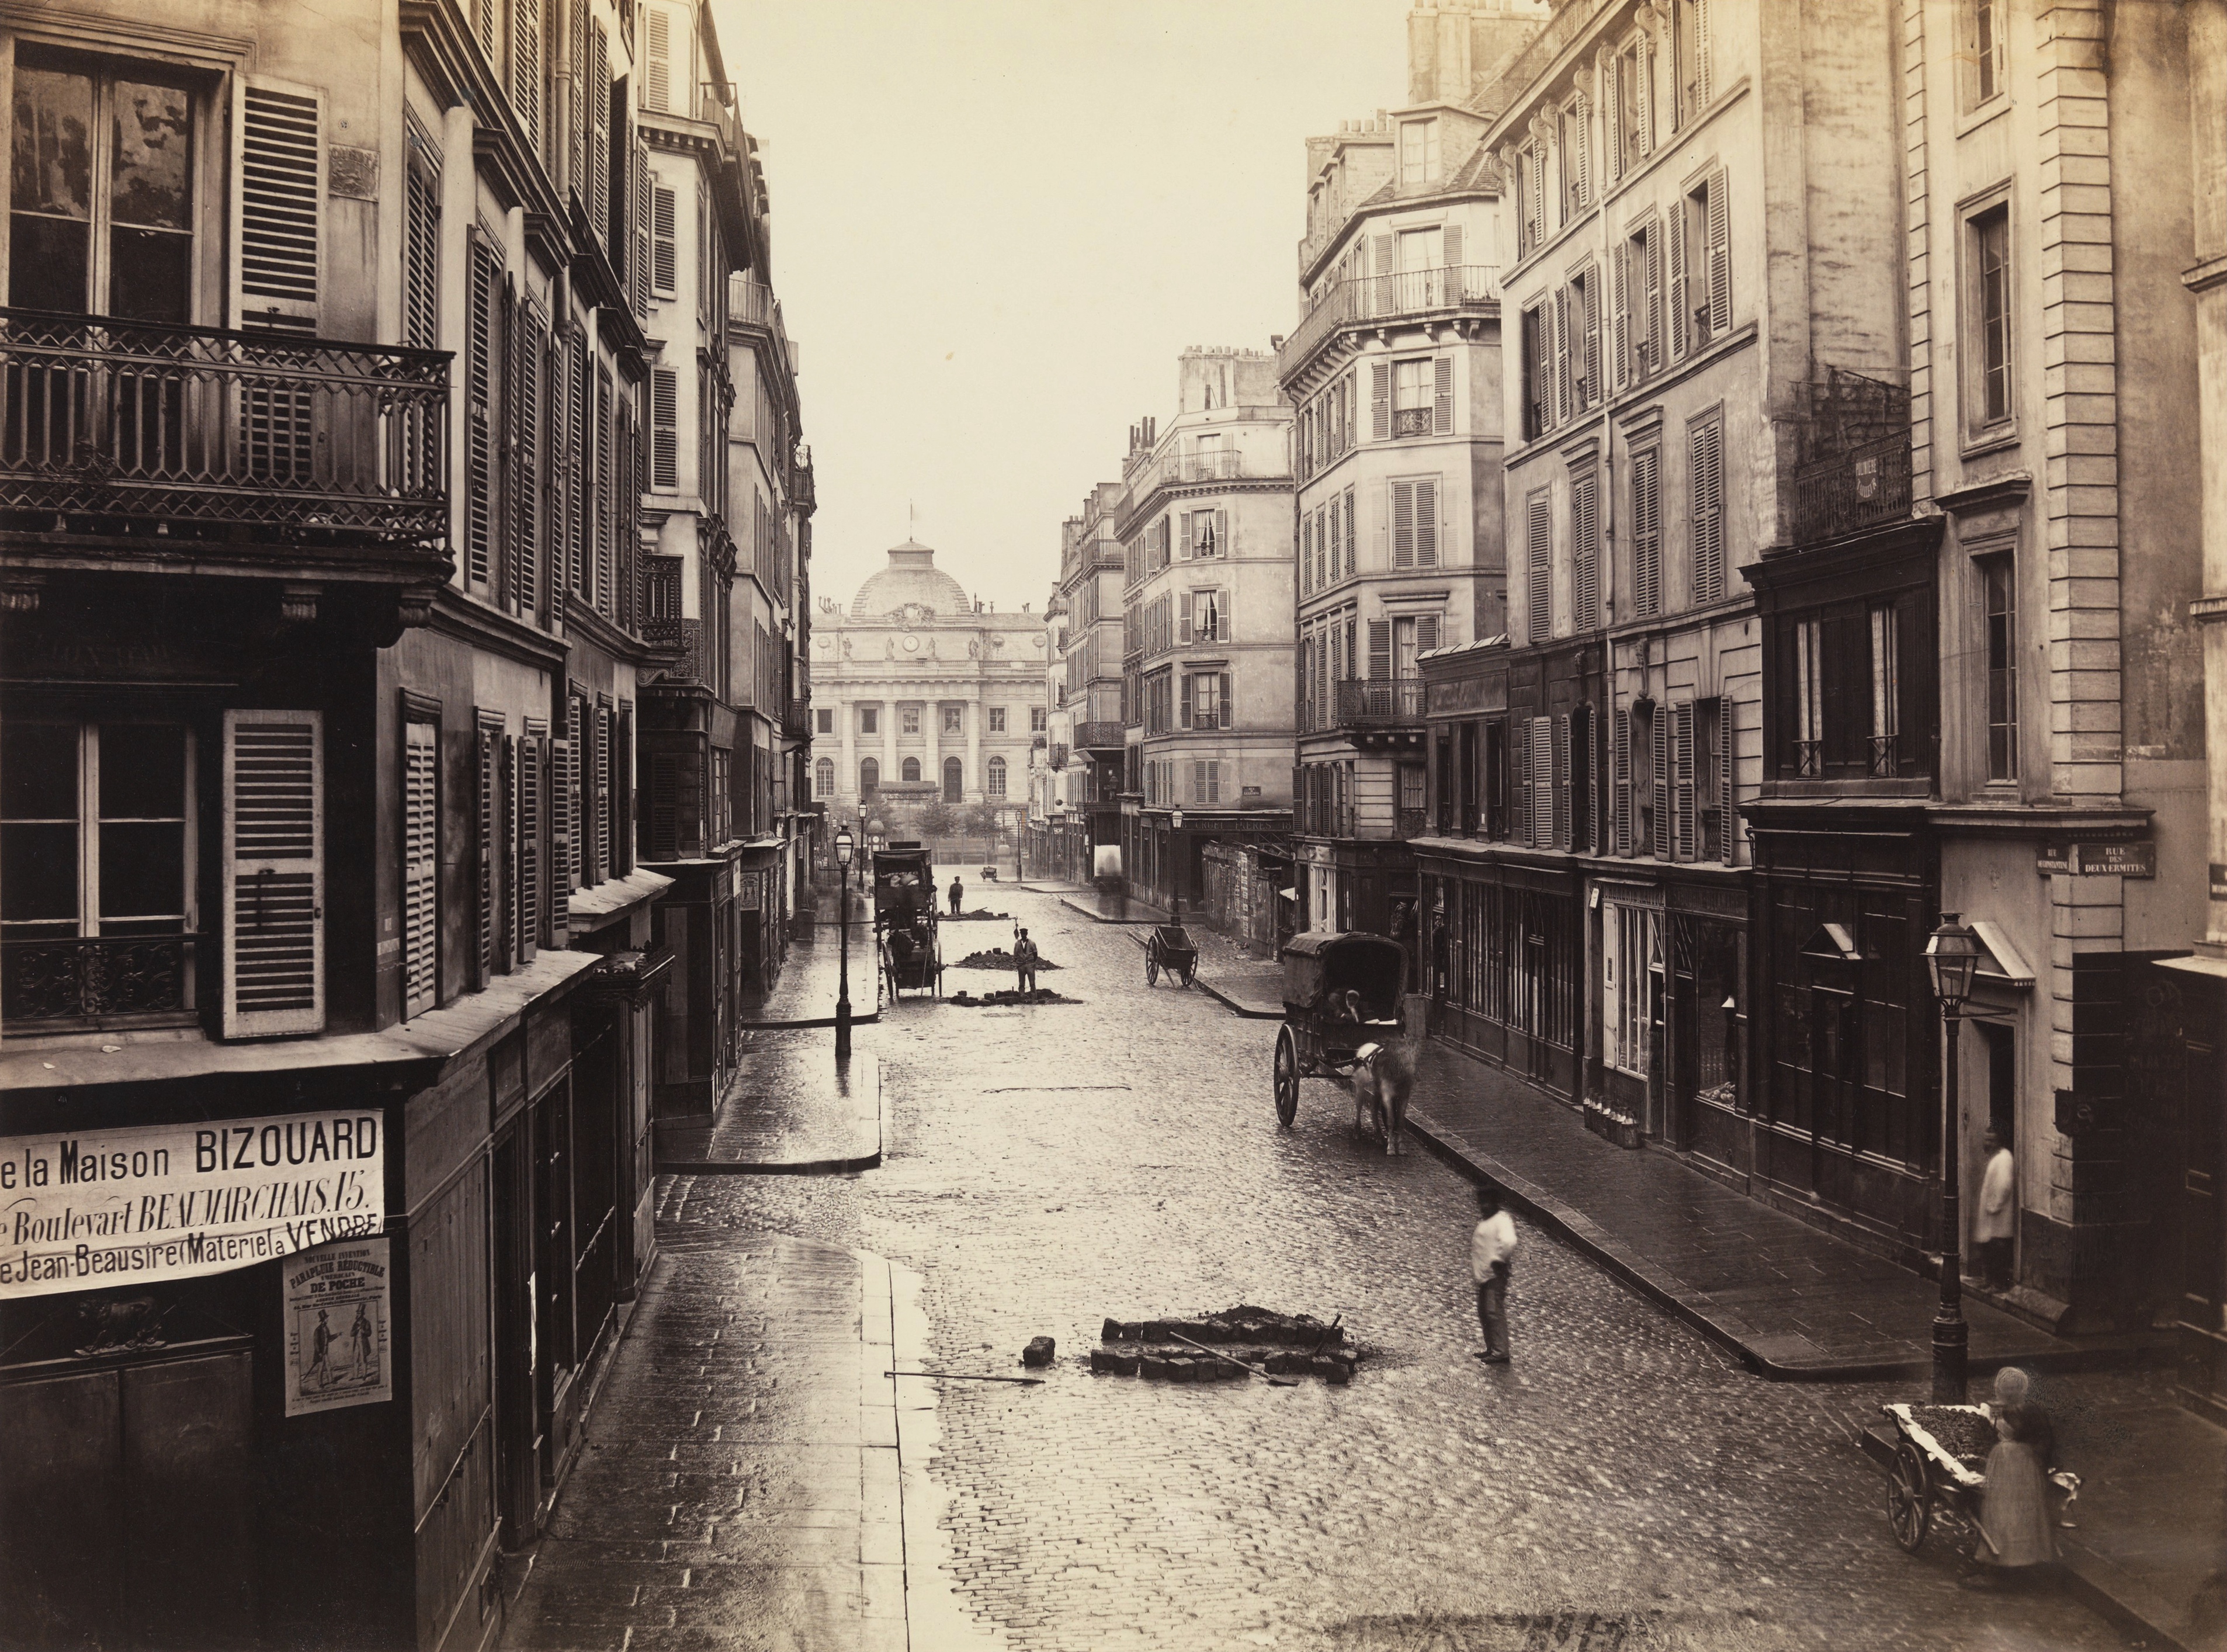 Rue de Constantine, Paris, by Charles Marville